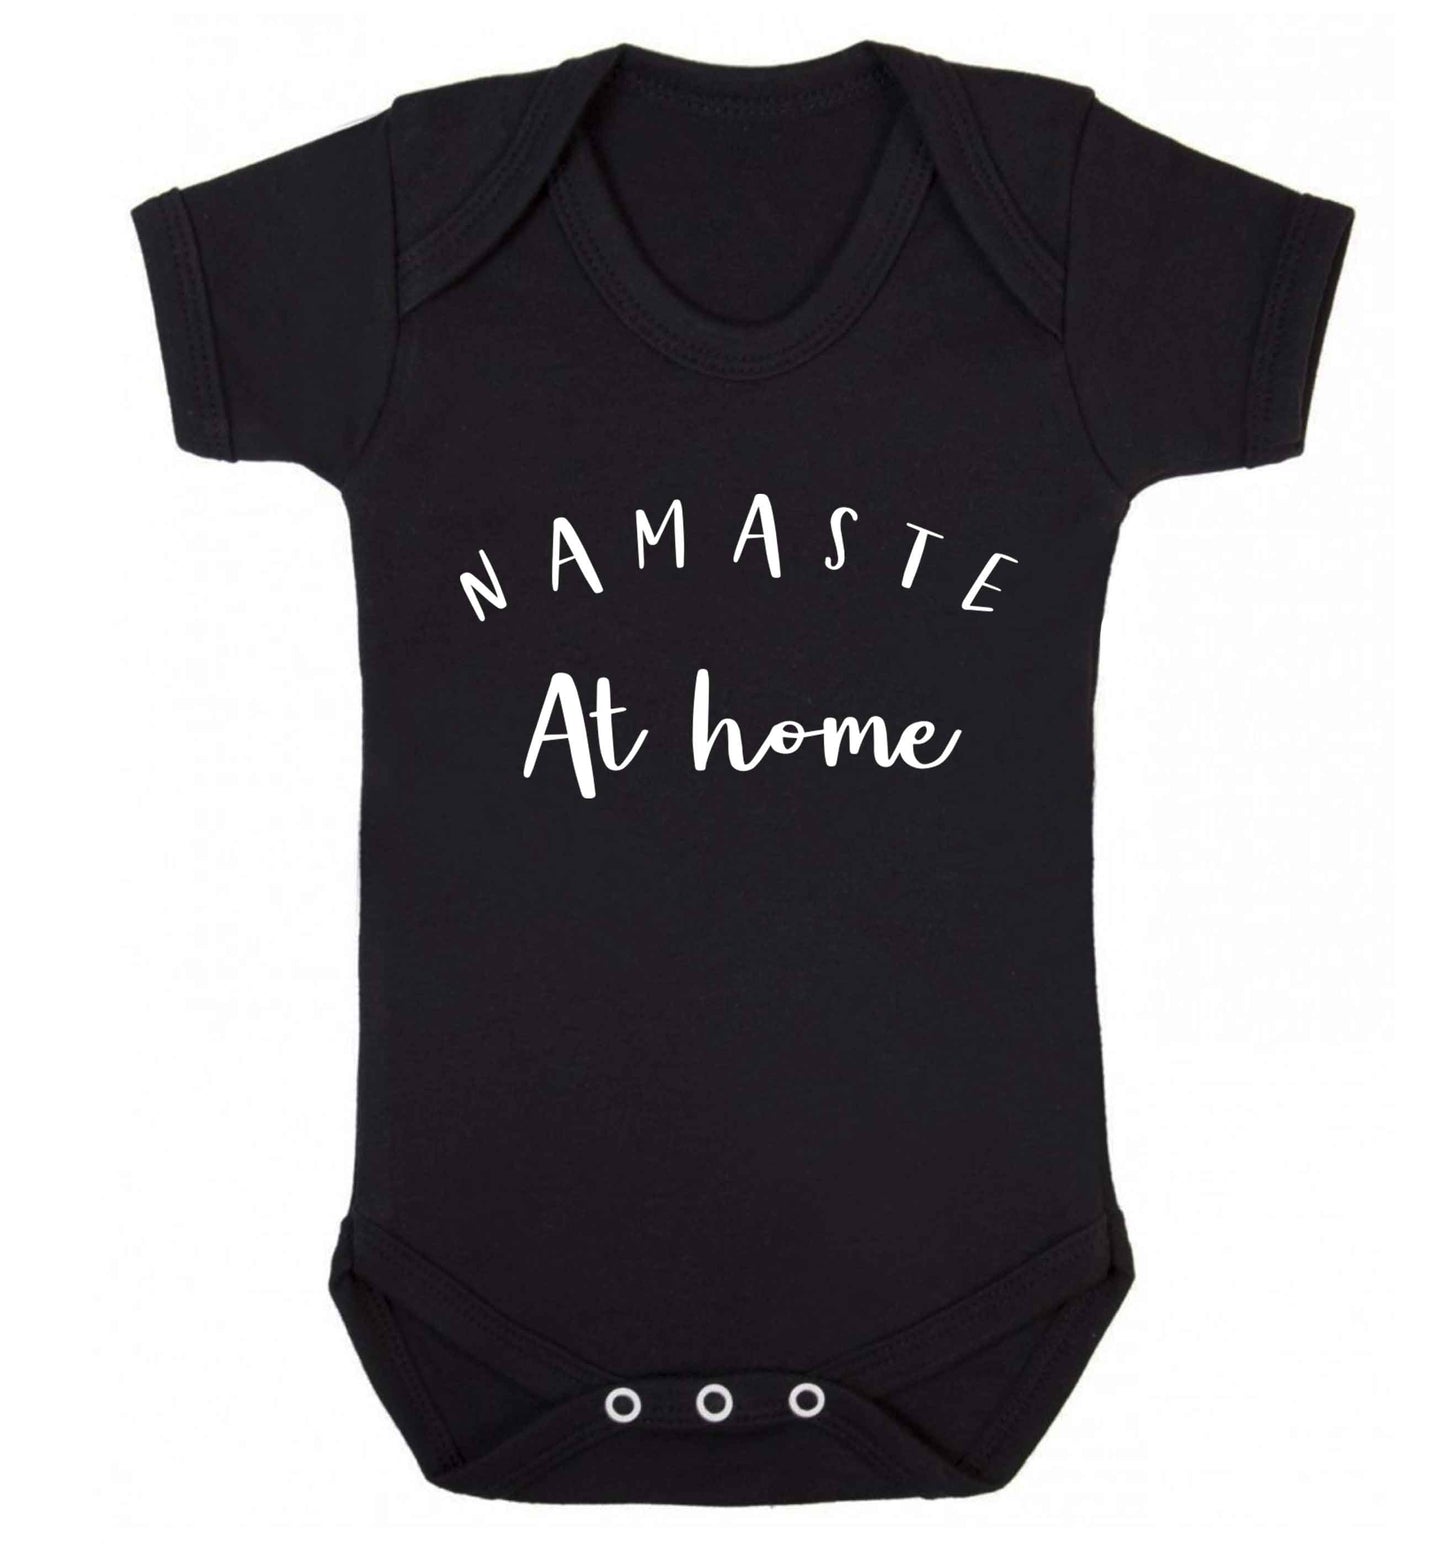 Namaste at home Baby Vest black 18-24 months